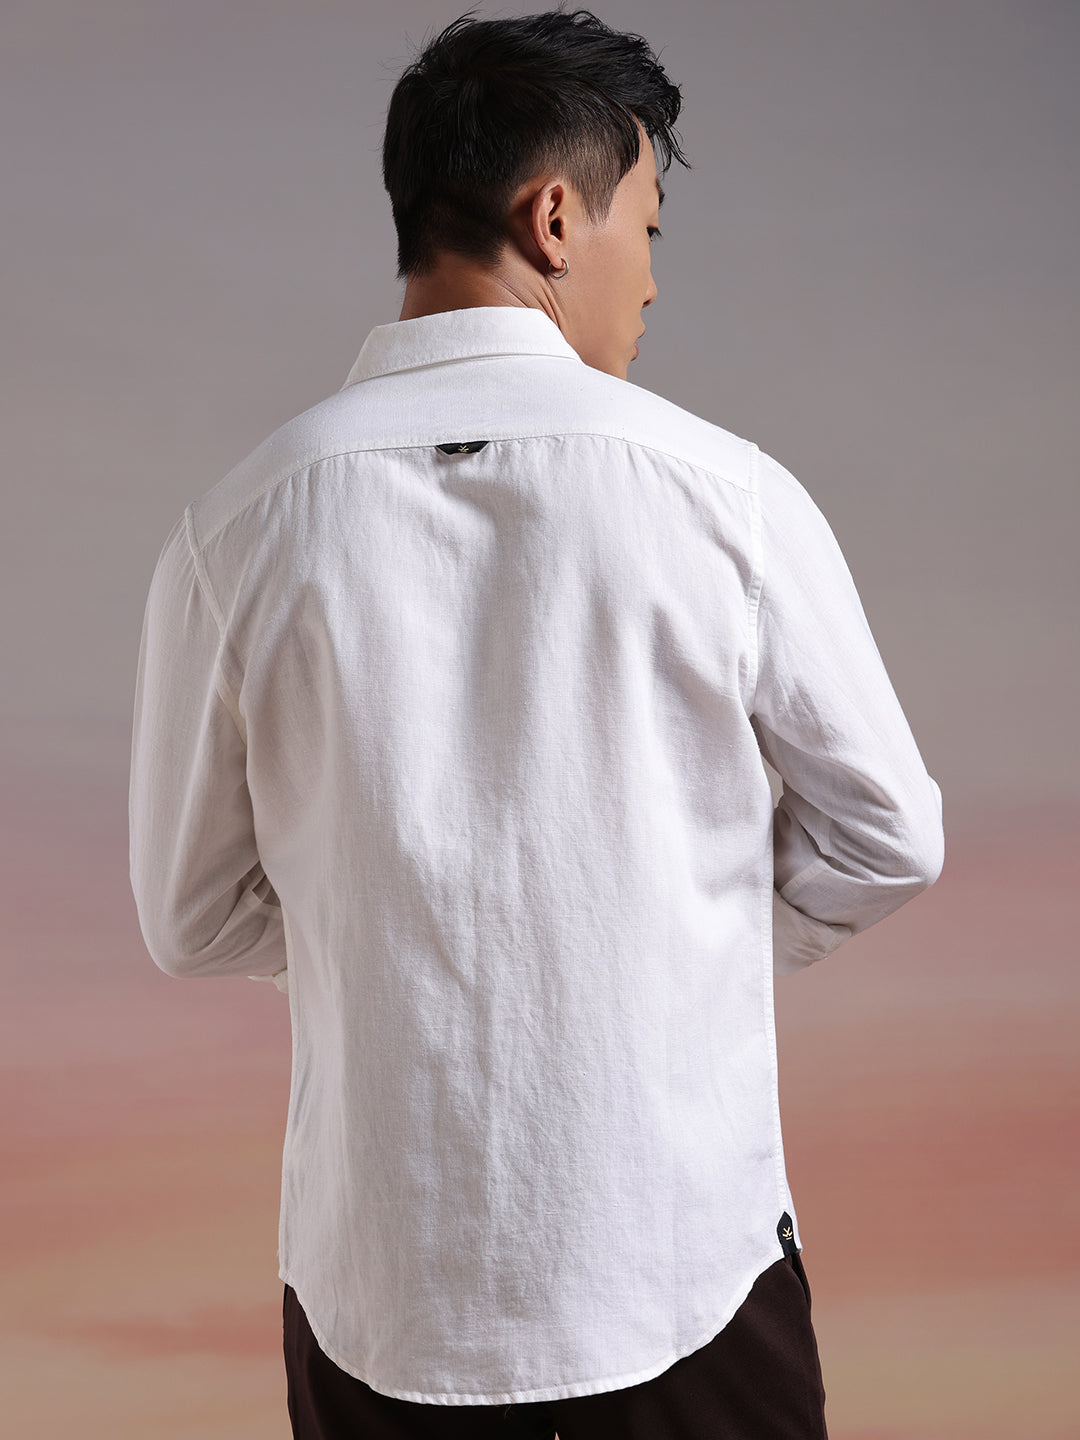 Classic Plain White Shirt